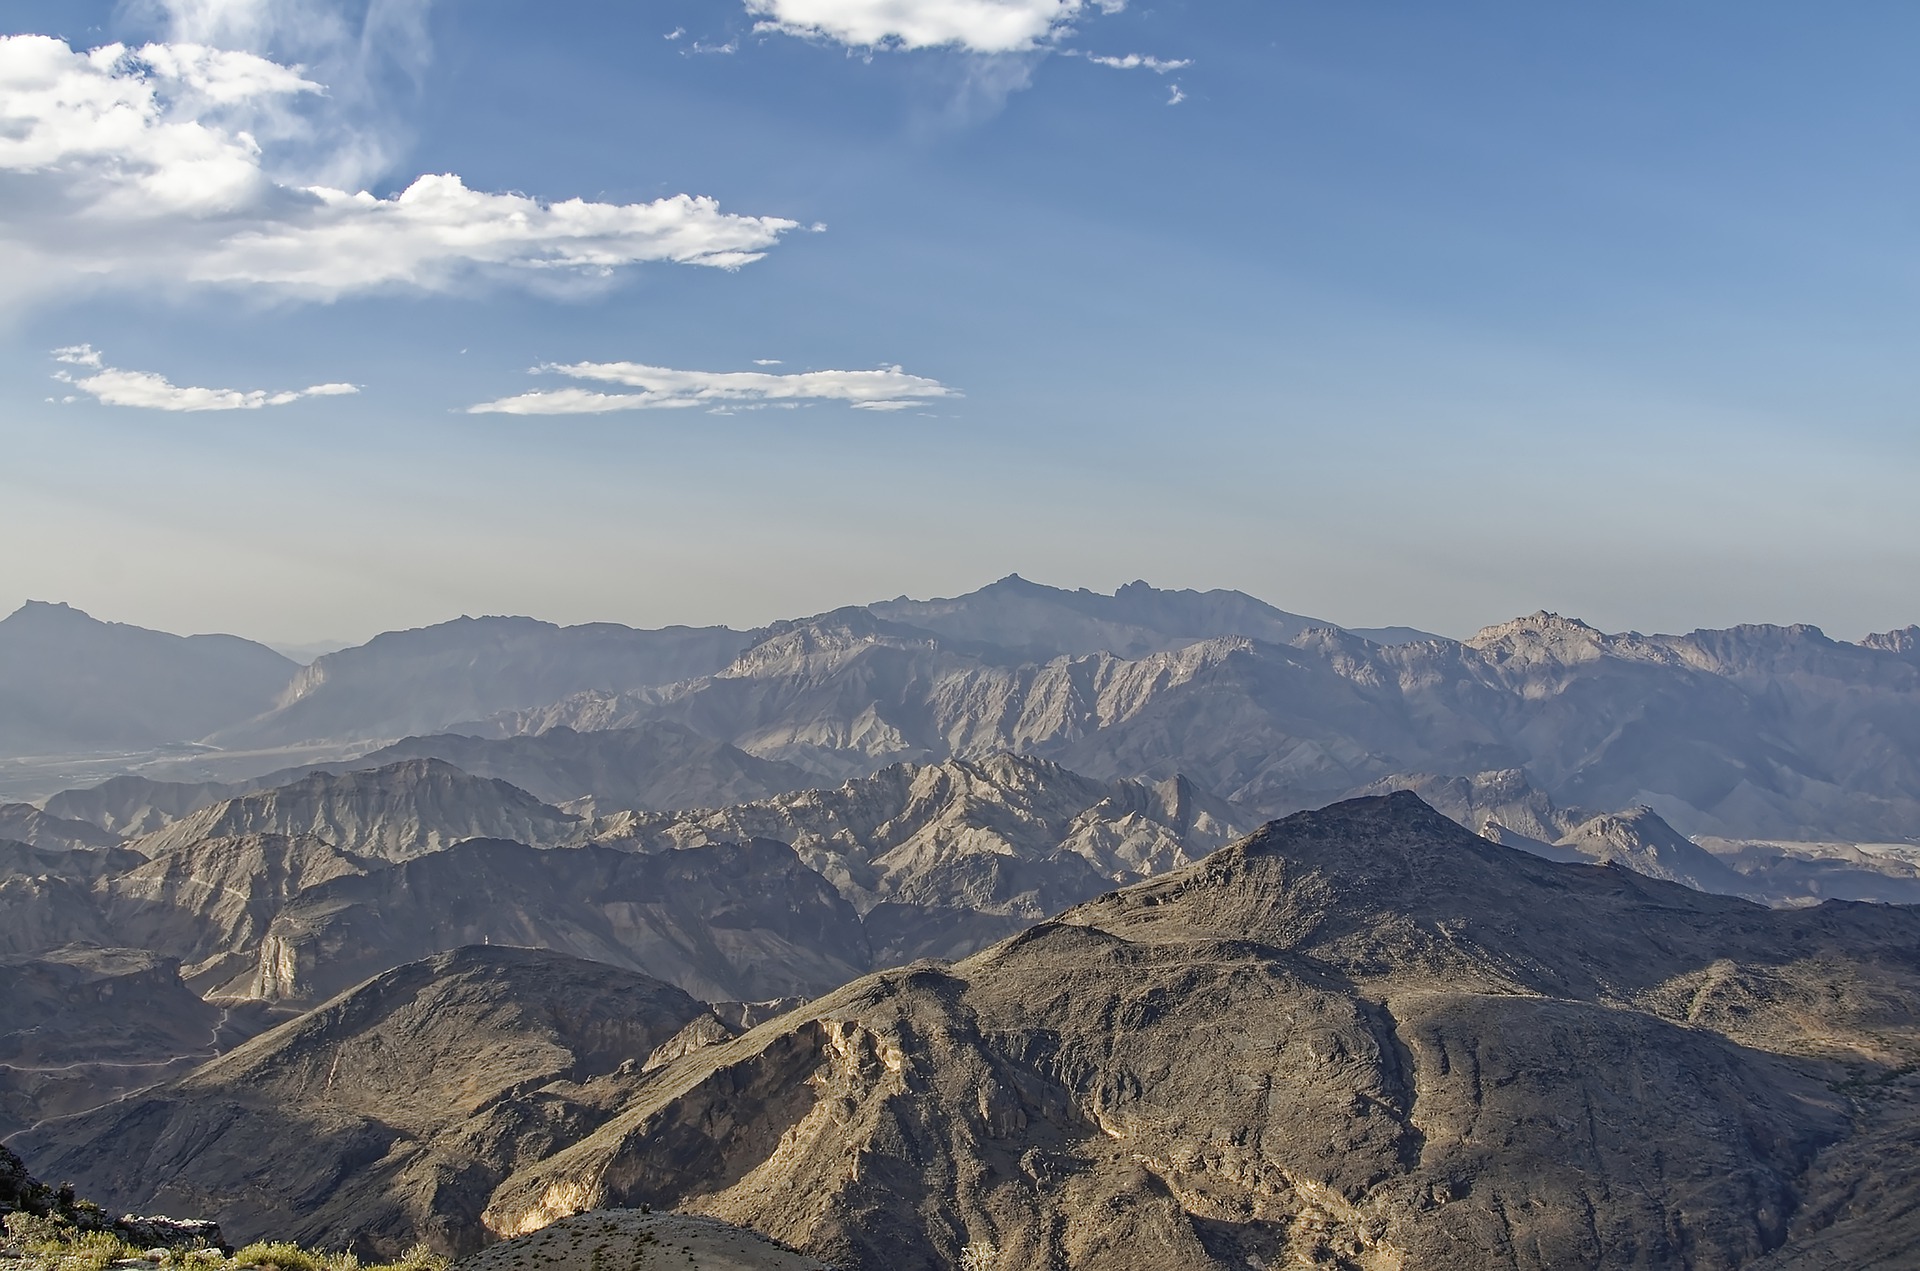 Djabal Achdar - Al Hajar Mountains